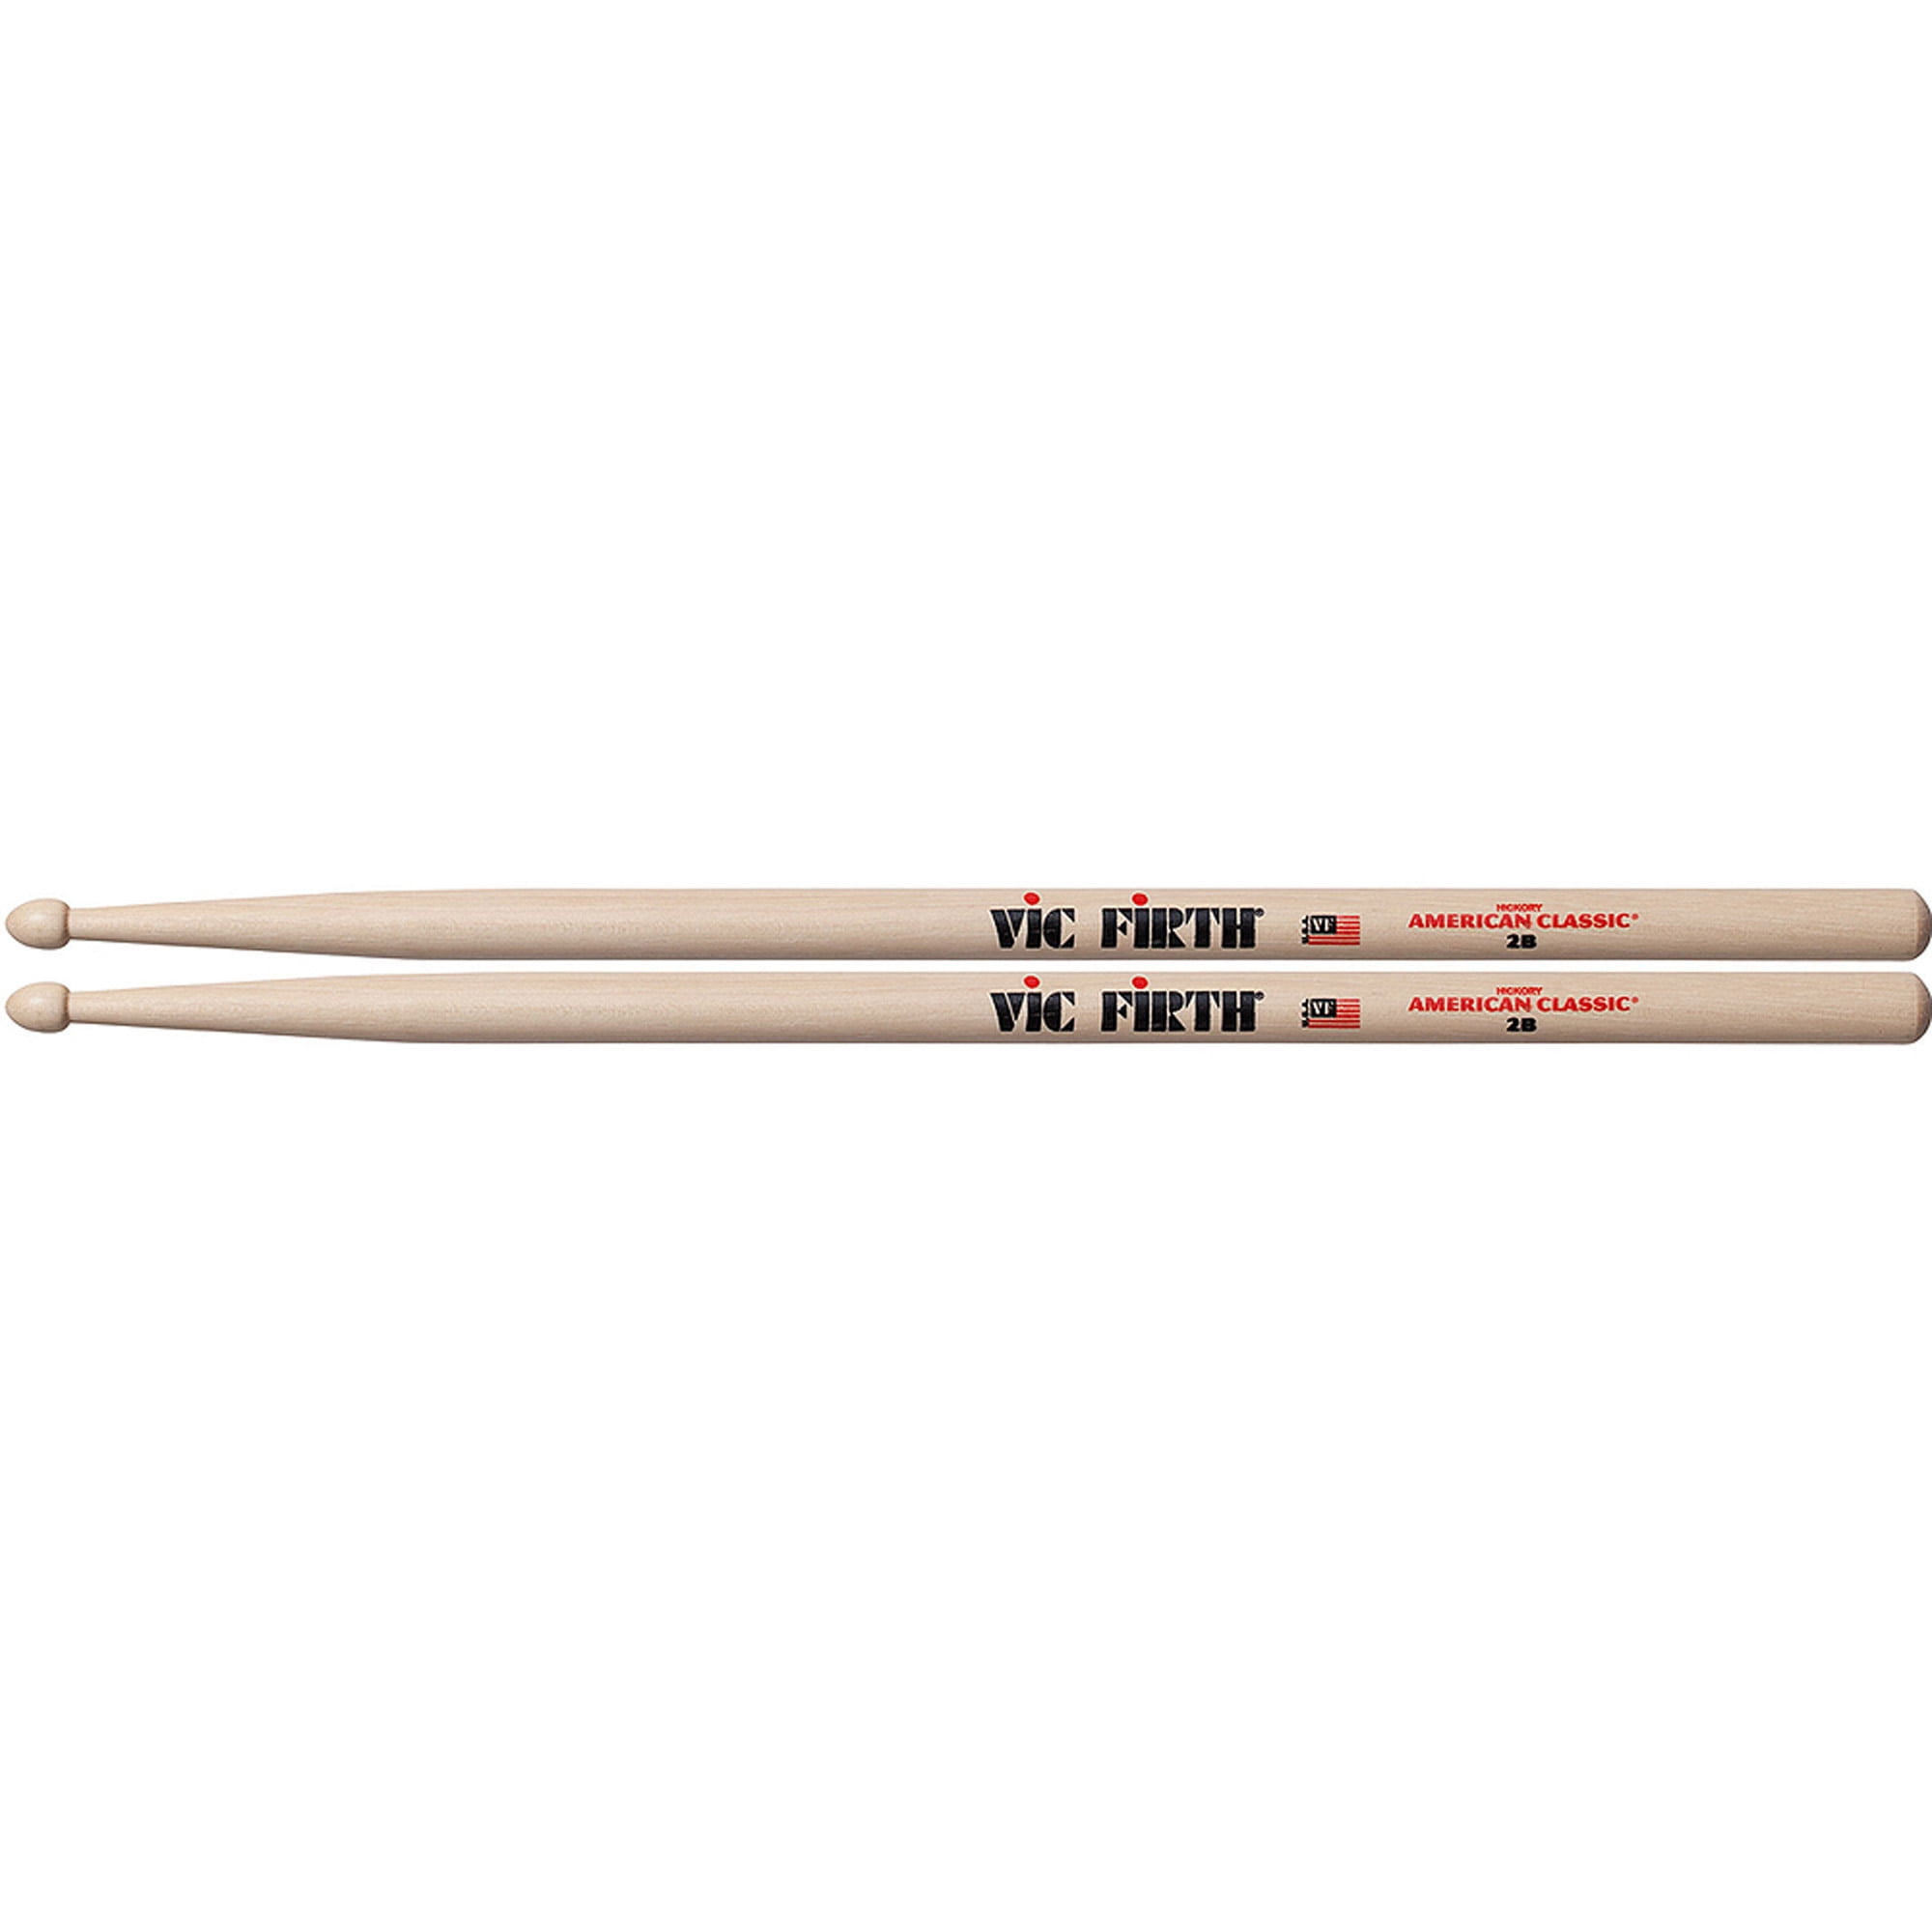 Vic Firth American Classic 5A Drum Sticks - Wood Tip